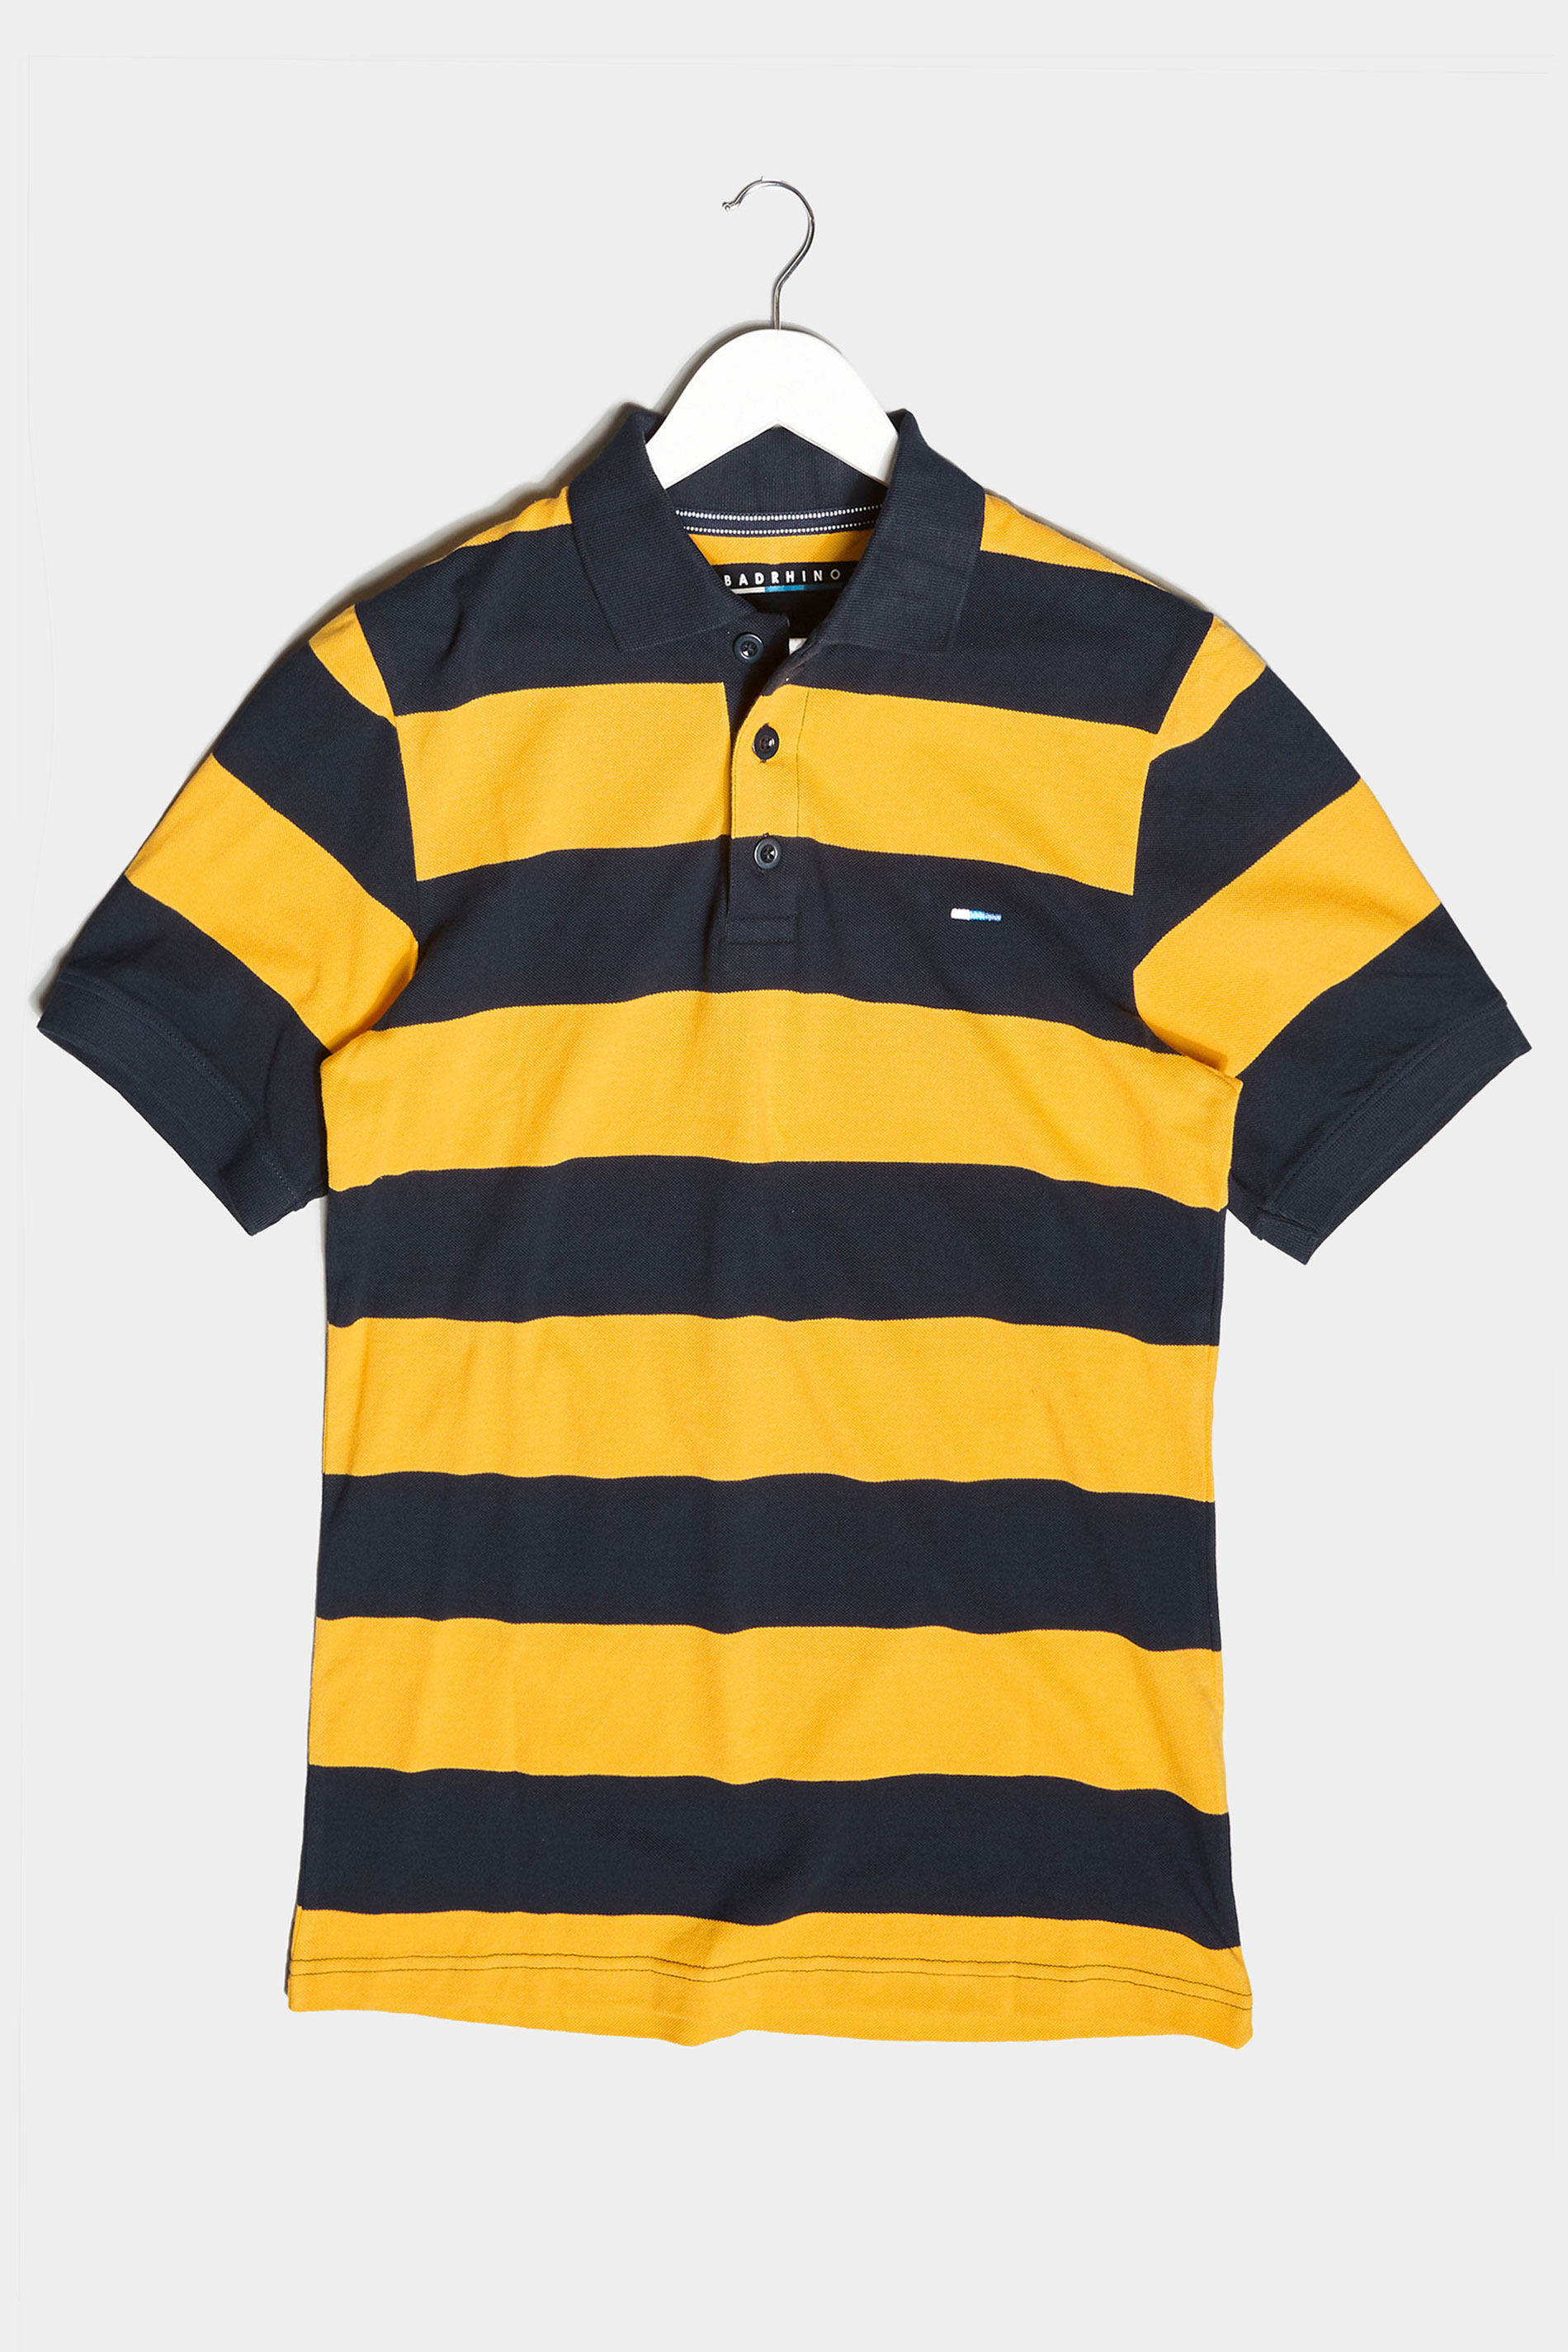 Badrhino Navy Blue And Yellow Striped Polo Shirt Badrhino